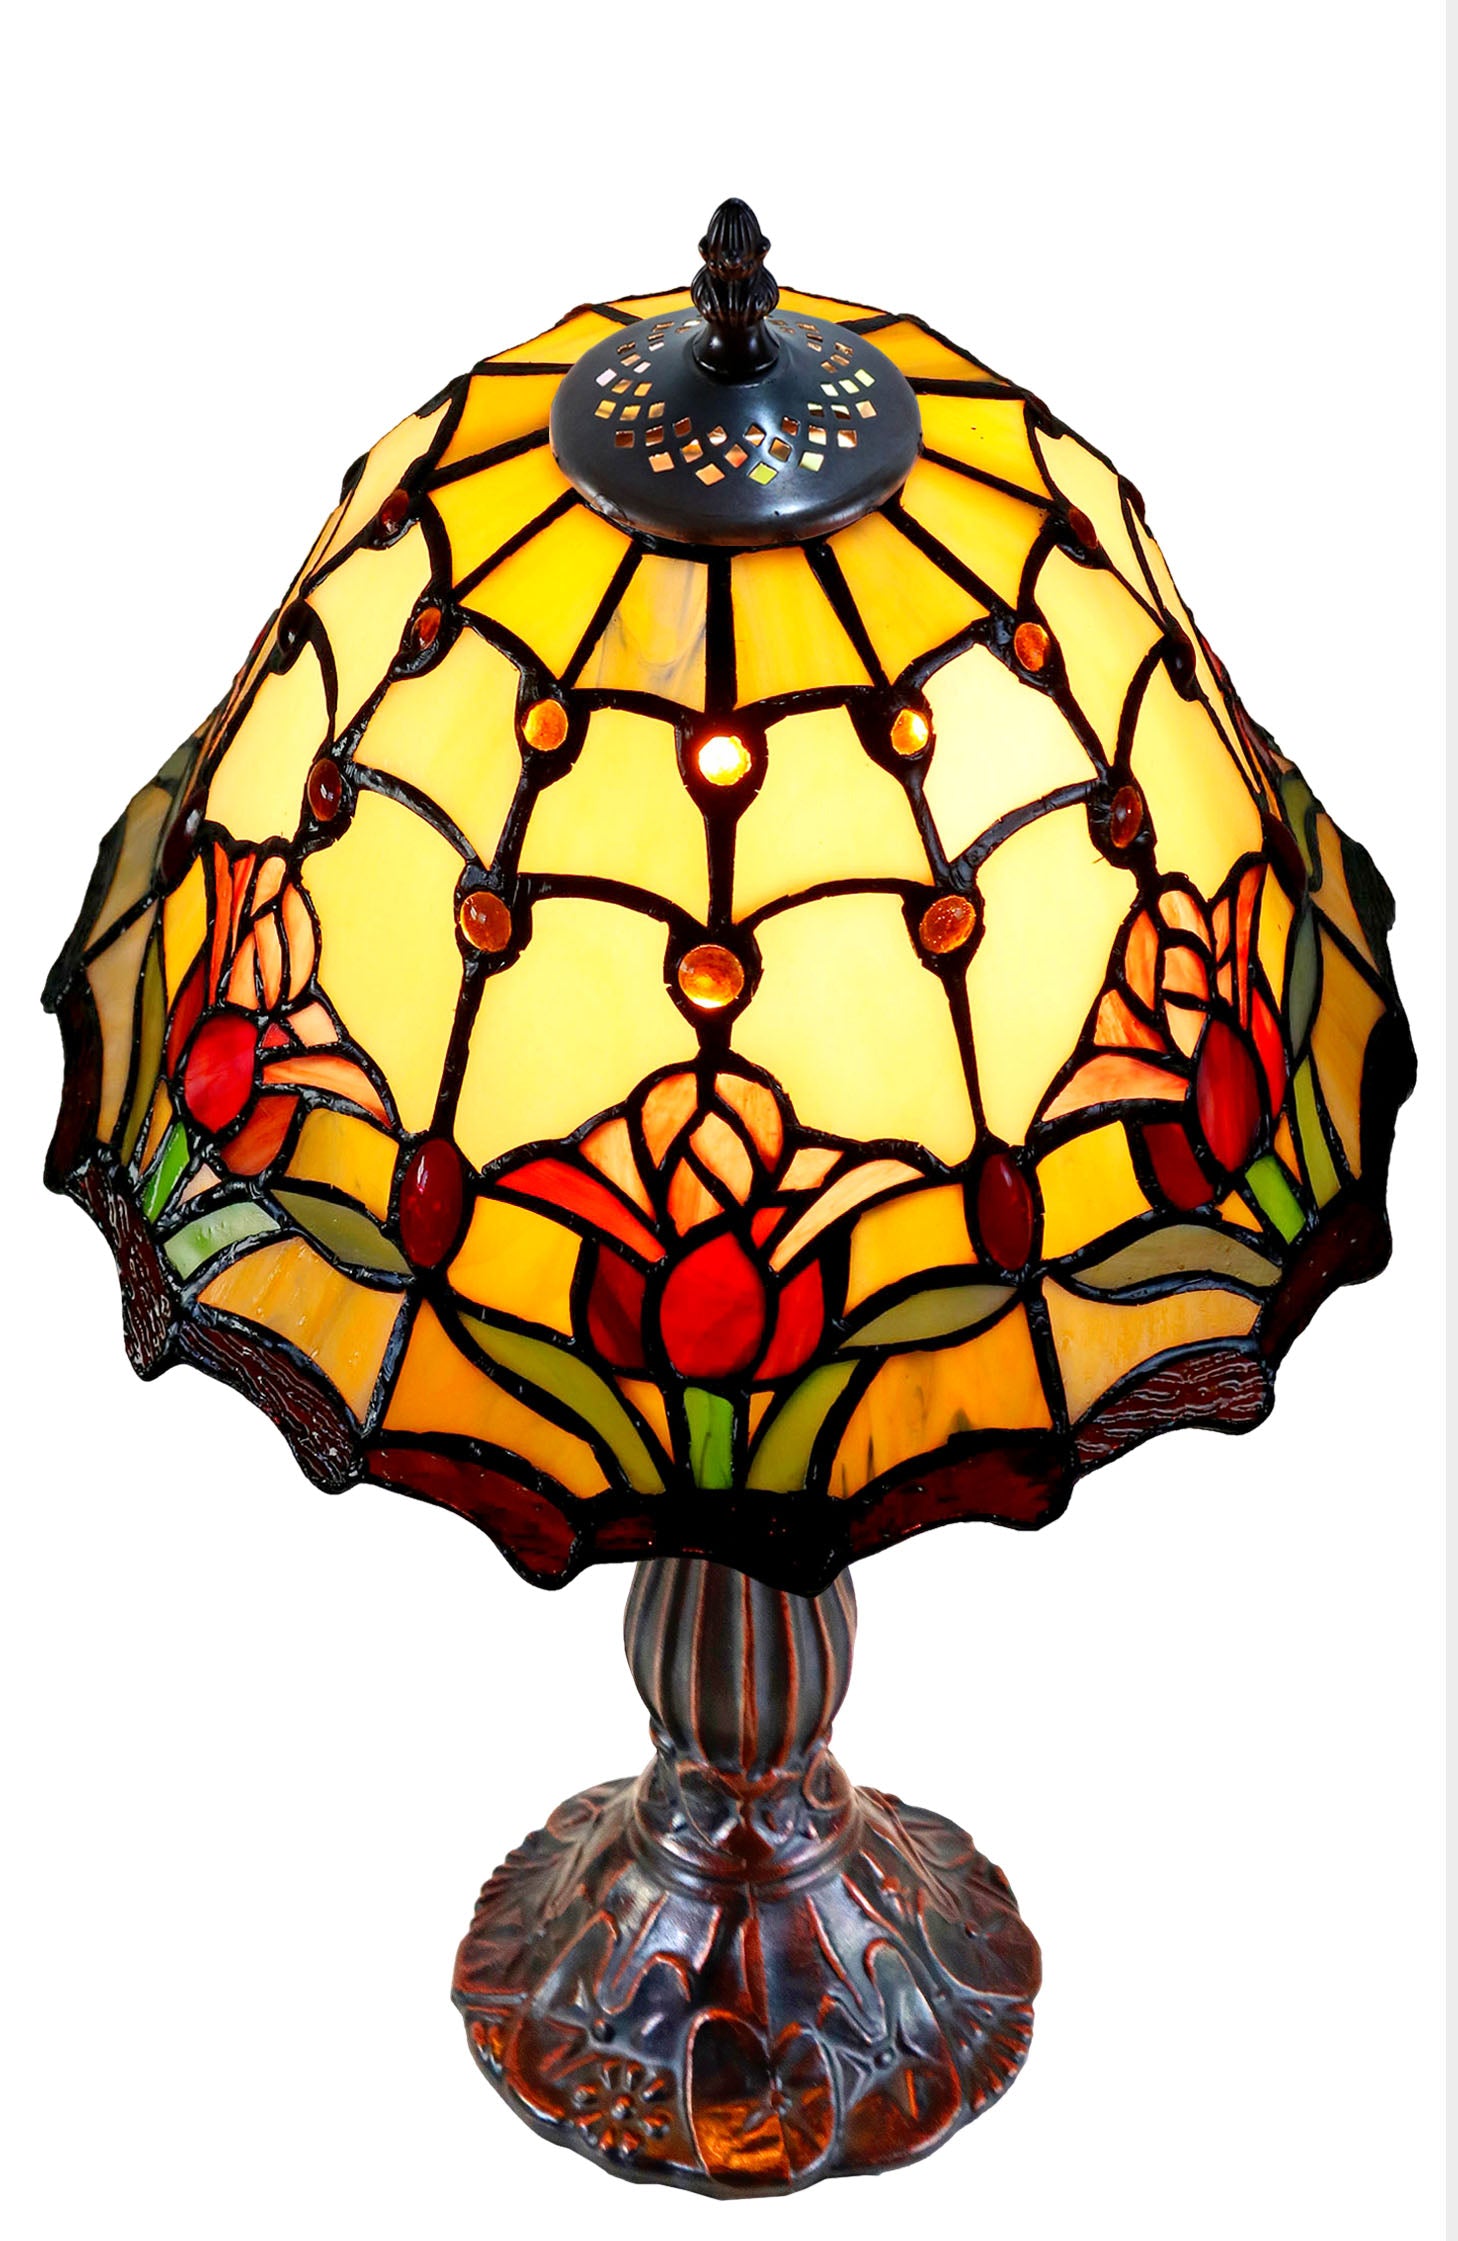 10" Colonial Tulip Style Tiffany desk Lamp